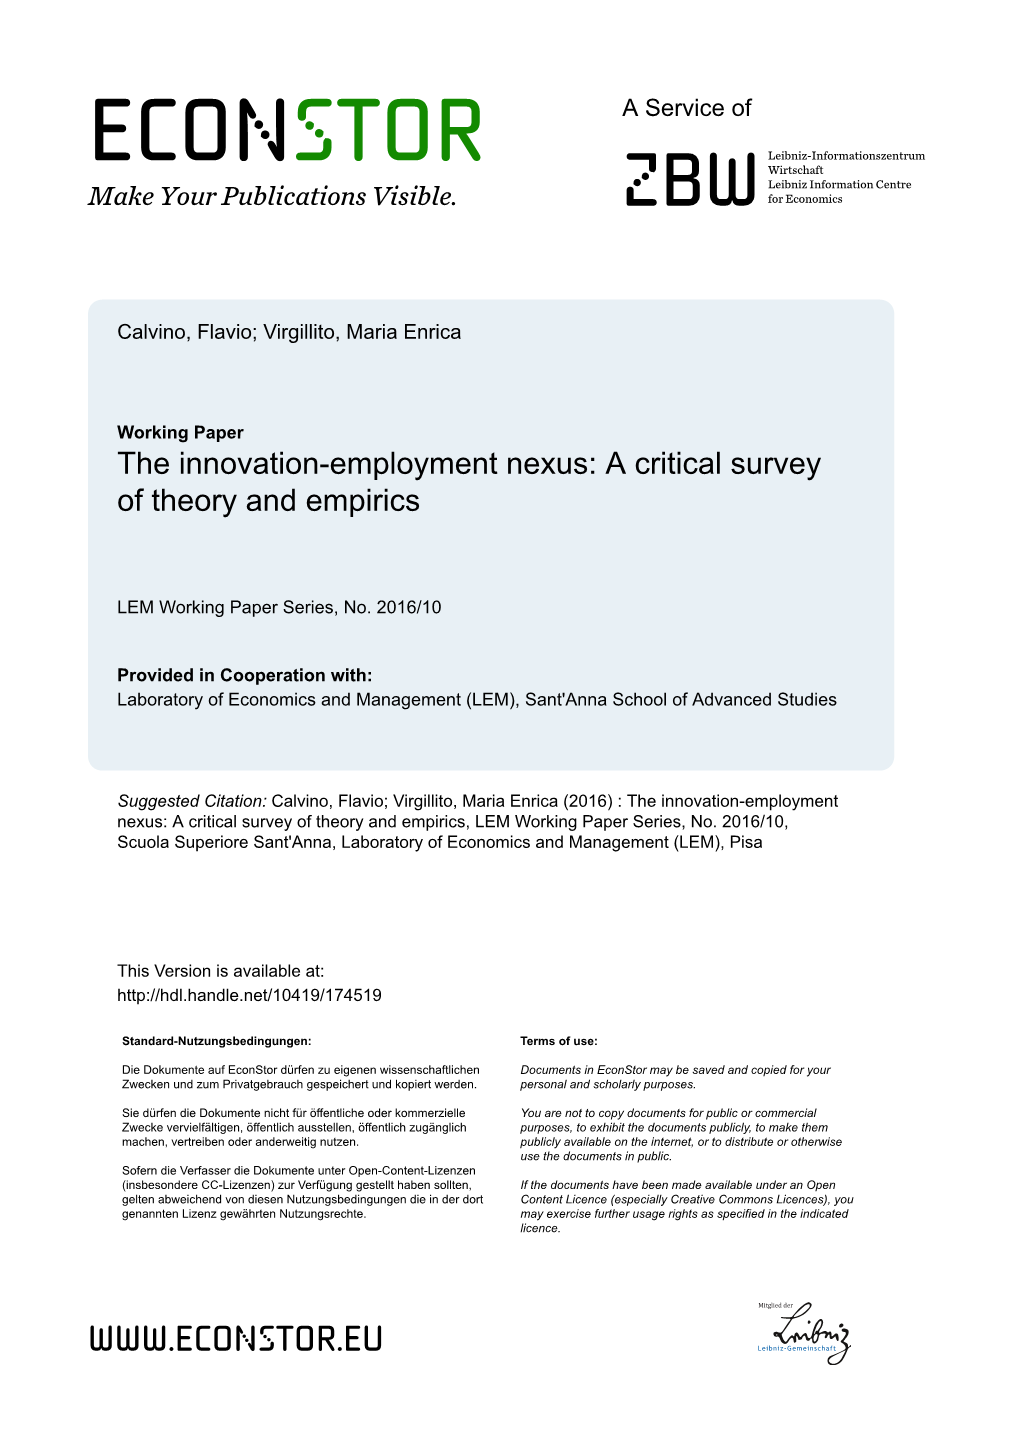 The Innovation-Employment Nexus: a Critical Survey of Theory and Empirics